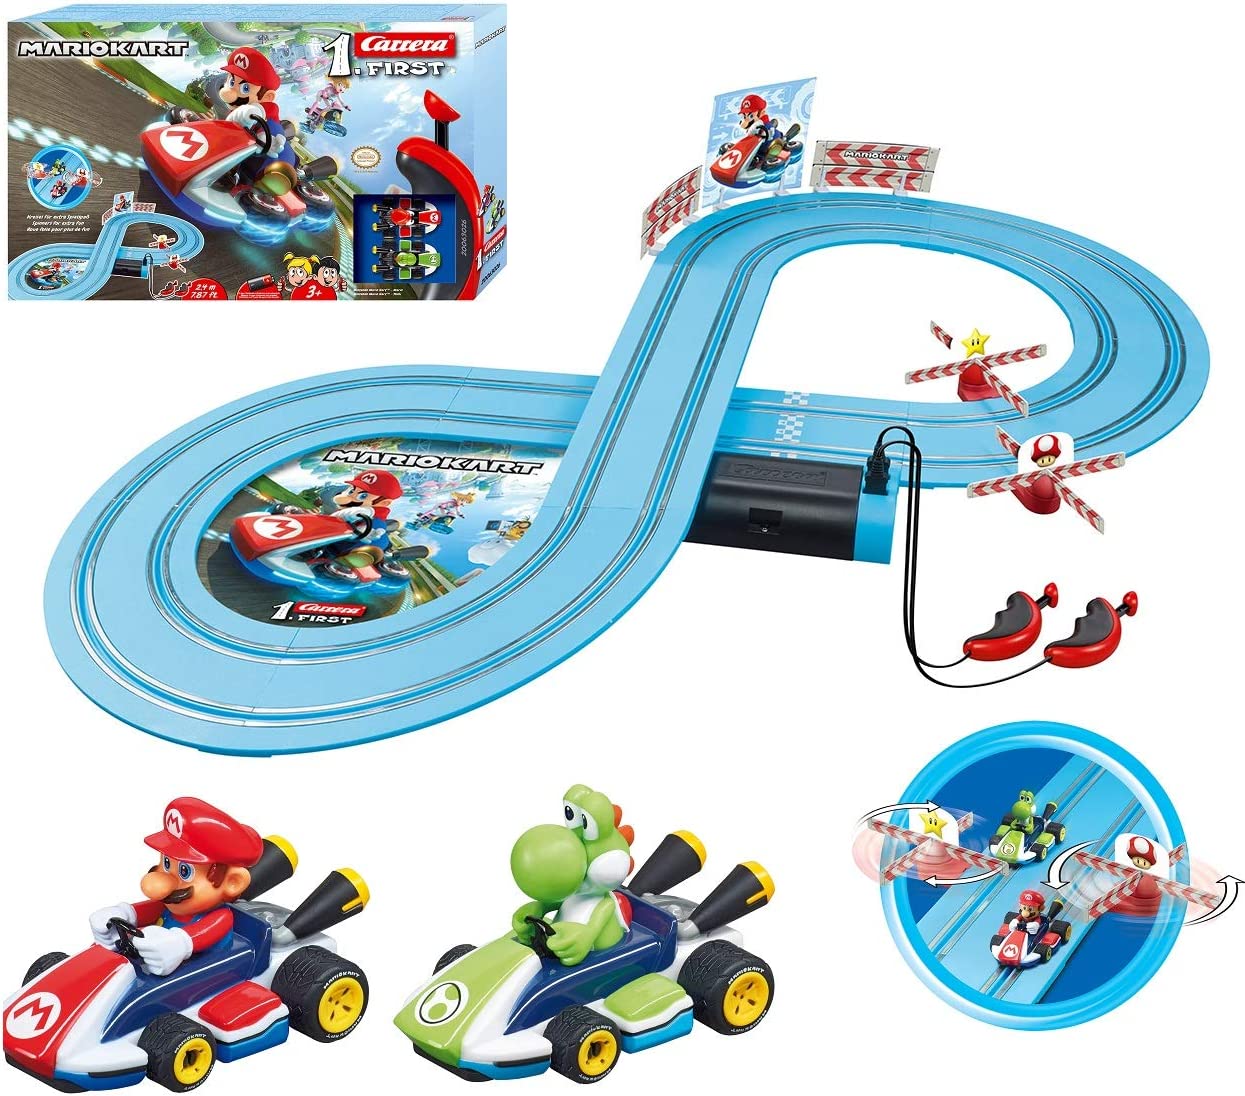 Carrera First Mario Kart Beginner Slot Car Race Track Set Featuring Mario Versus Yoshi - image 3 of 7